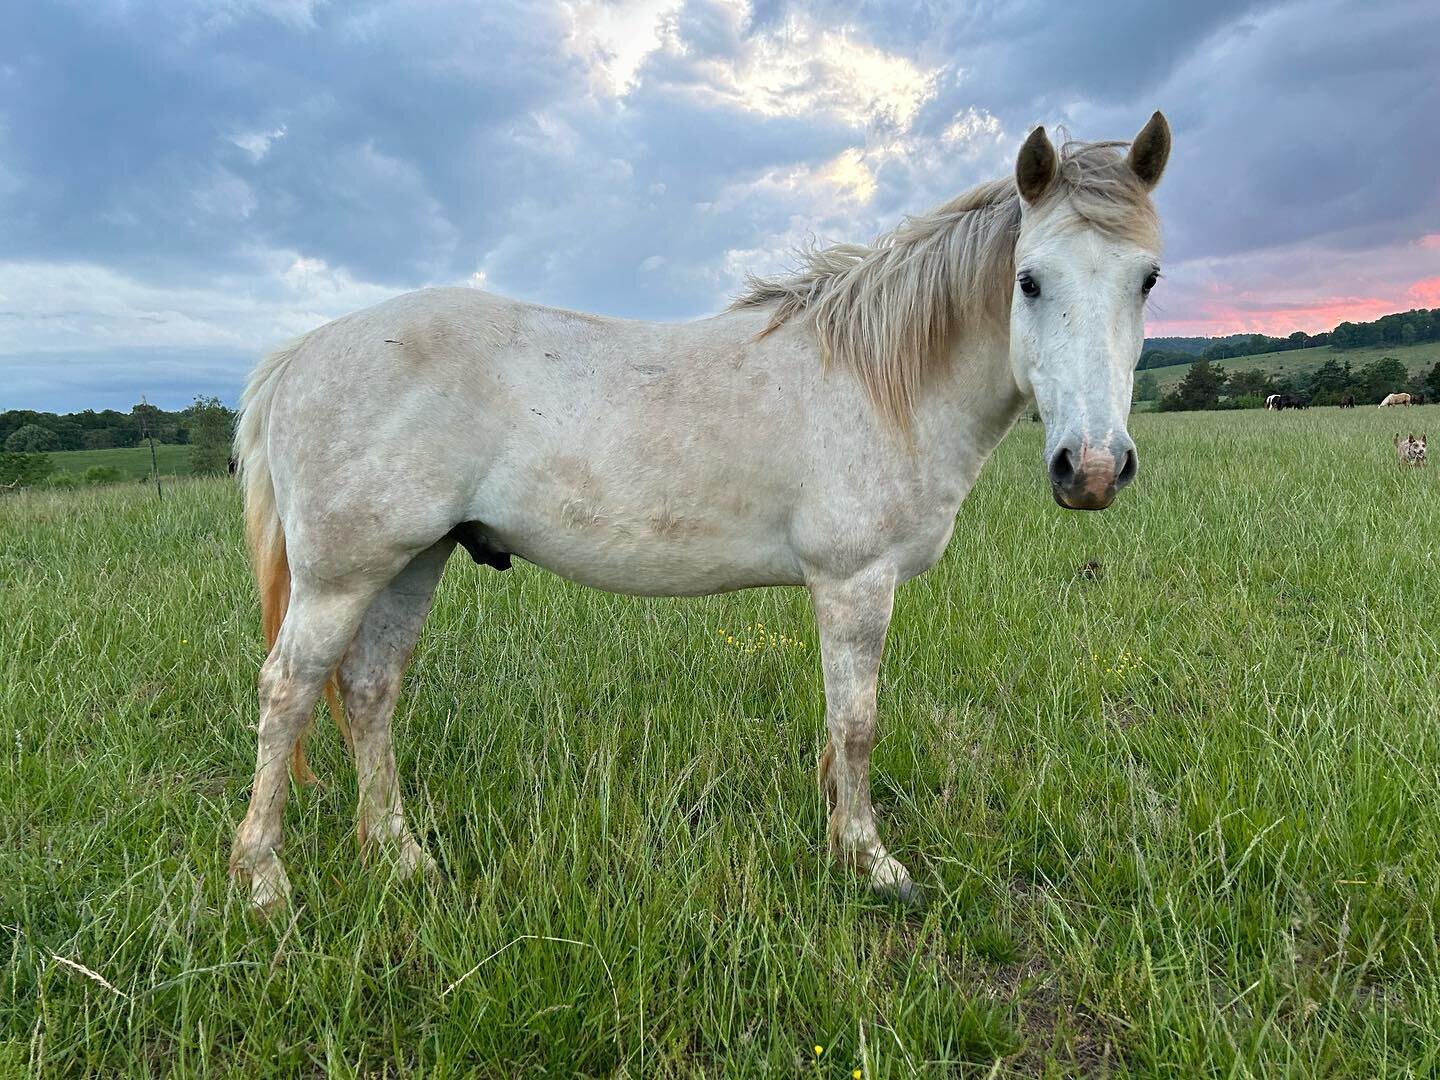 Name that pony. Does anyone recognize this handsome boy?
.
.
@springvalleyfarm @springvalley_farm @chadsimmons32 #springvalleyfarm #handsome #horse #horsesofinstagram #sunset #virginia